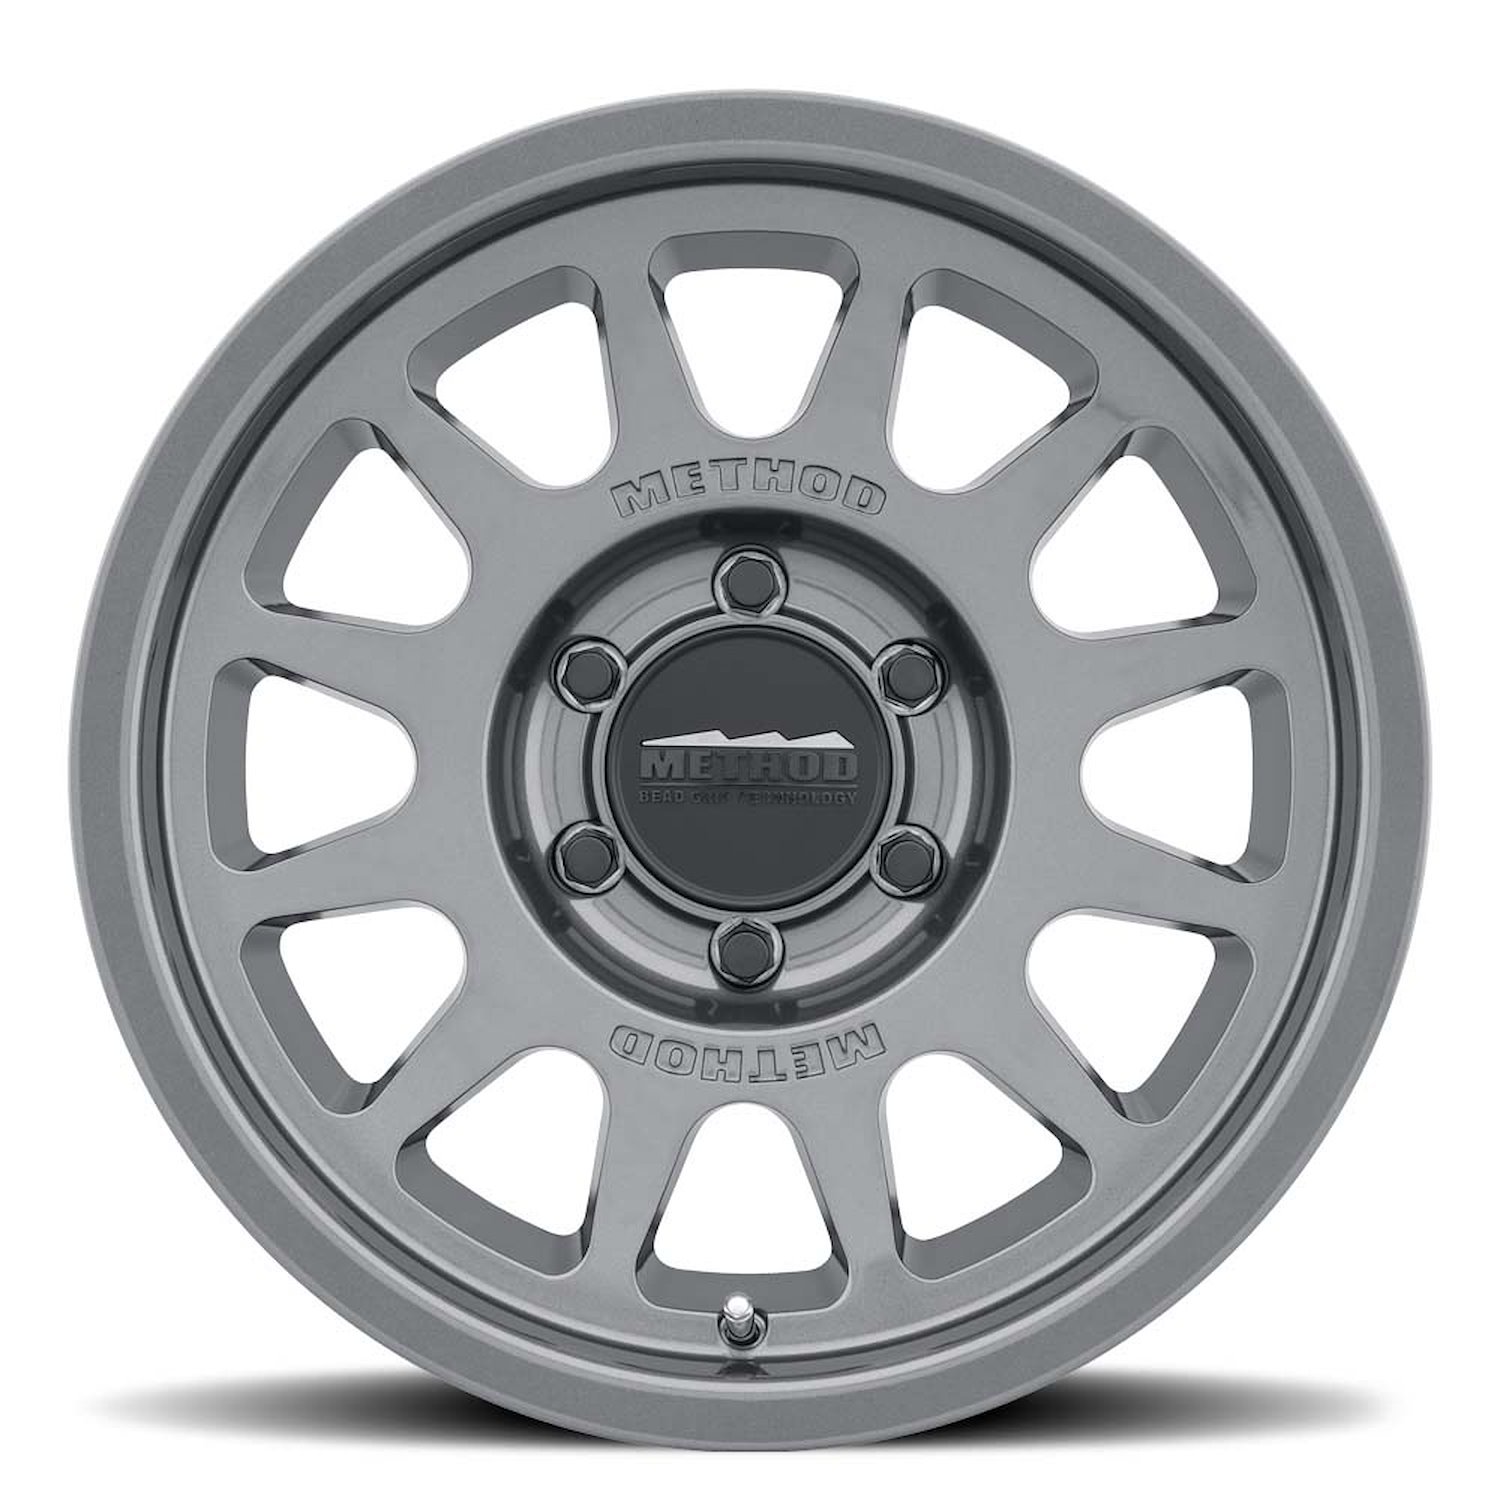 MR70378516800 TRAIL MR703 Bead Grip Wheel [Size: 17" x 8.5"] Gloss Titanium